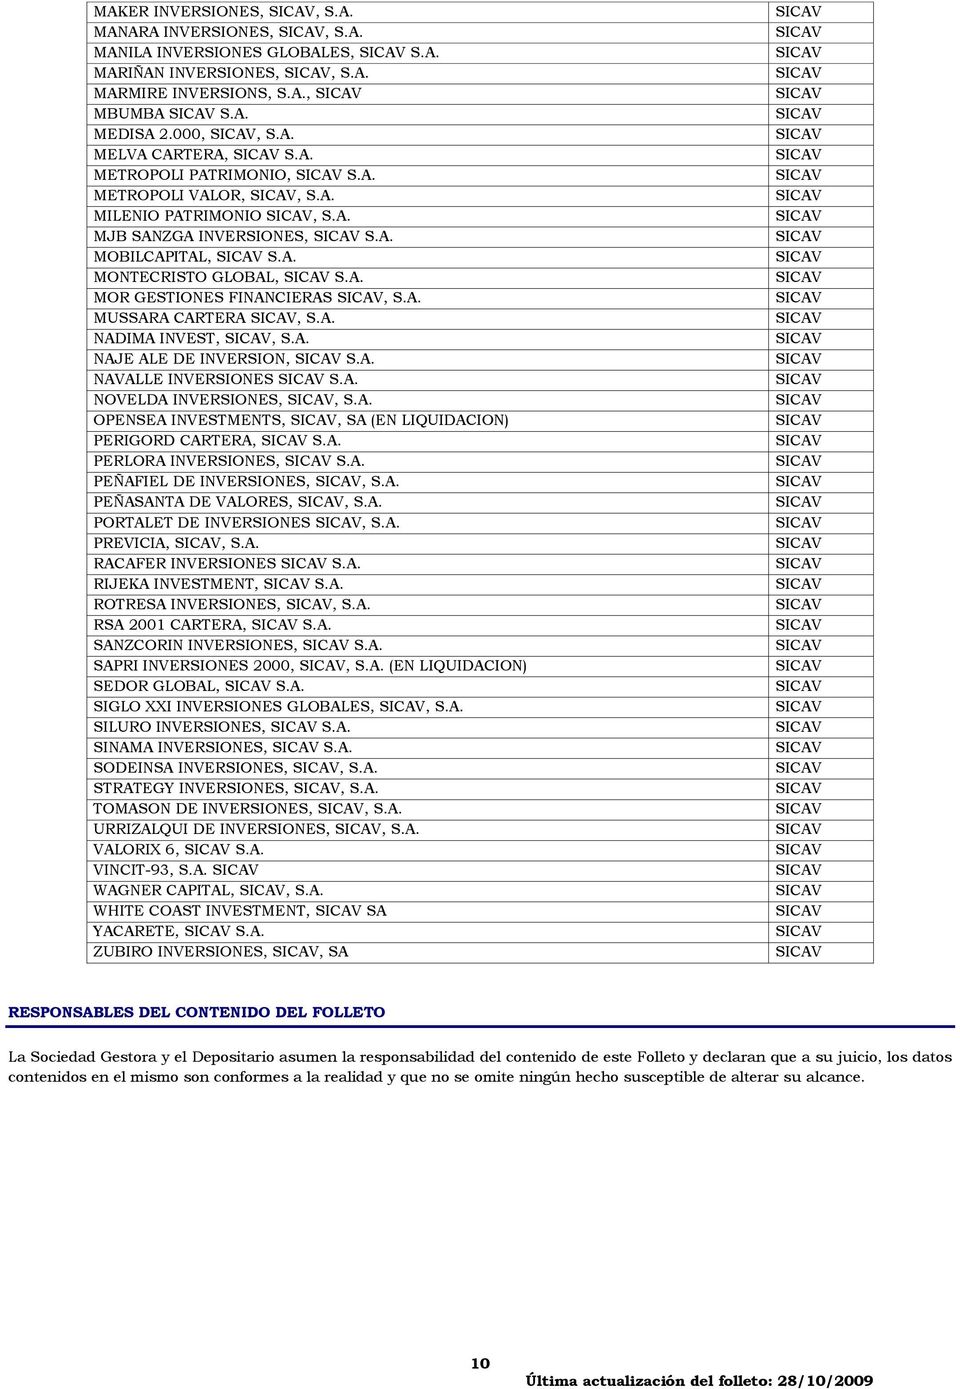 A. NAVALLE INVERSIONES S.A. NOVELDA INVERSIONES,, S.A. OPENSEA INVESTMENTS,, SA (EN LIQUIDACION) PERIGORD CARTERA, S.A. PERLORA INVERSIONES, S.A. PEÑAEL DE INVERSIONES,, S.A. PEÑASANTA DE VALORES,, S.